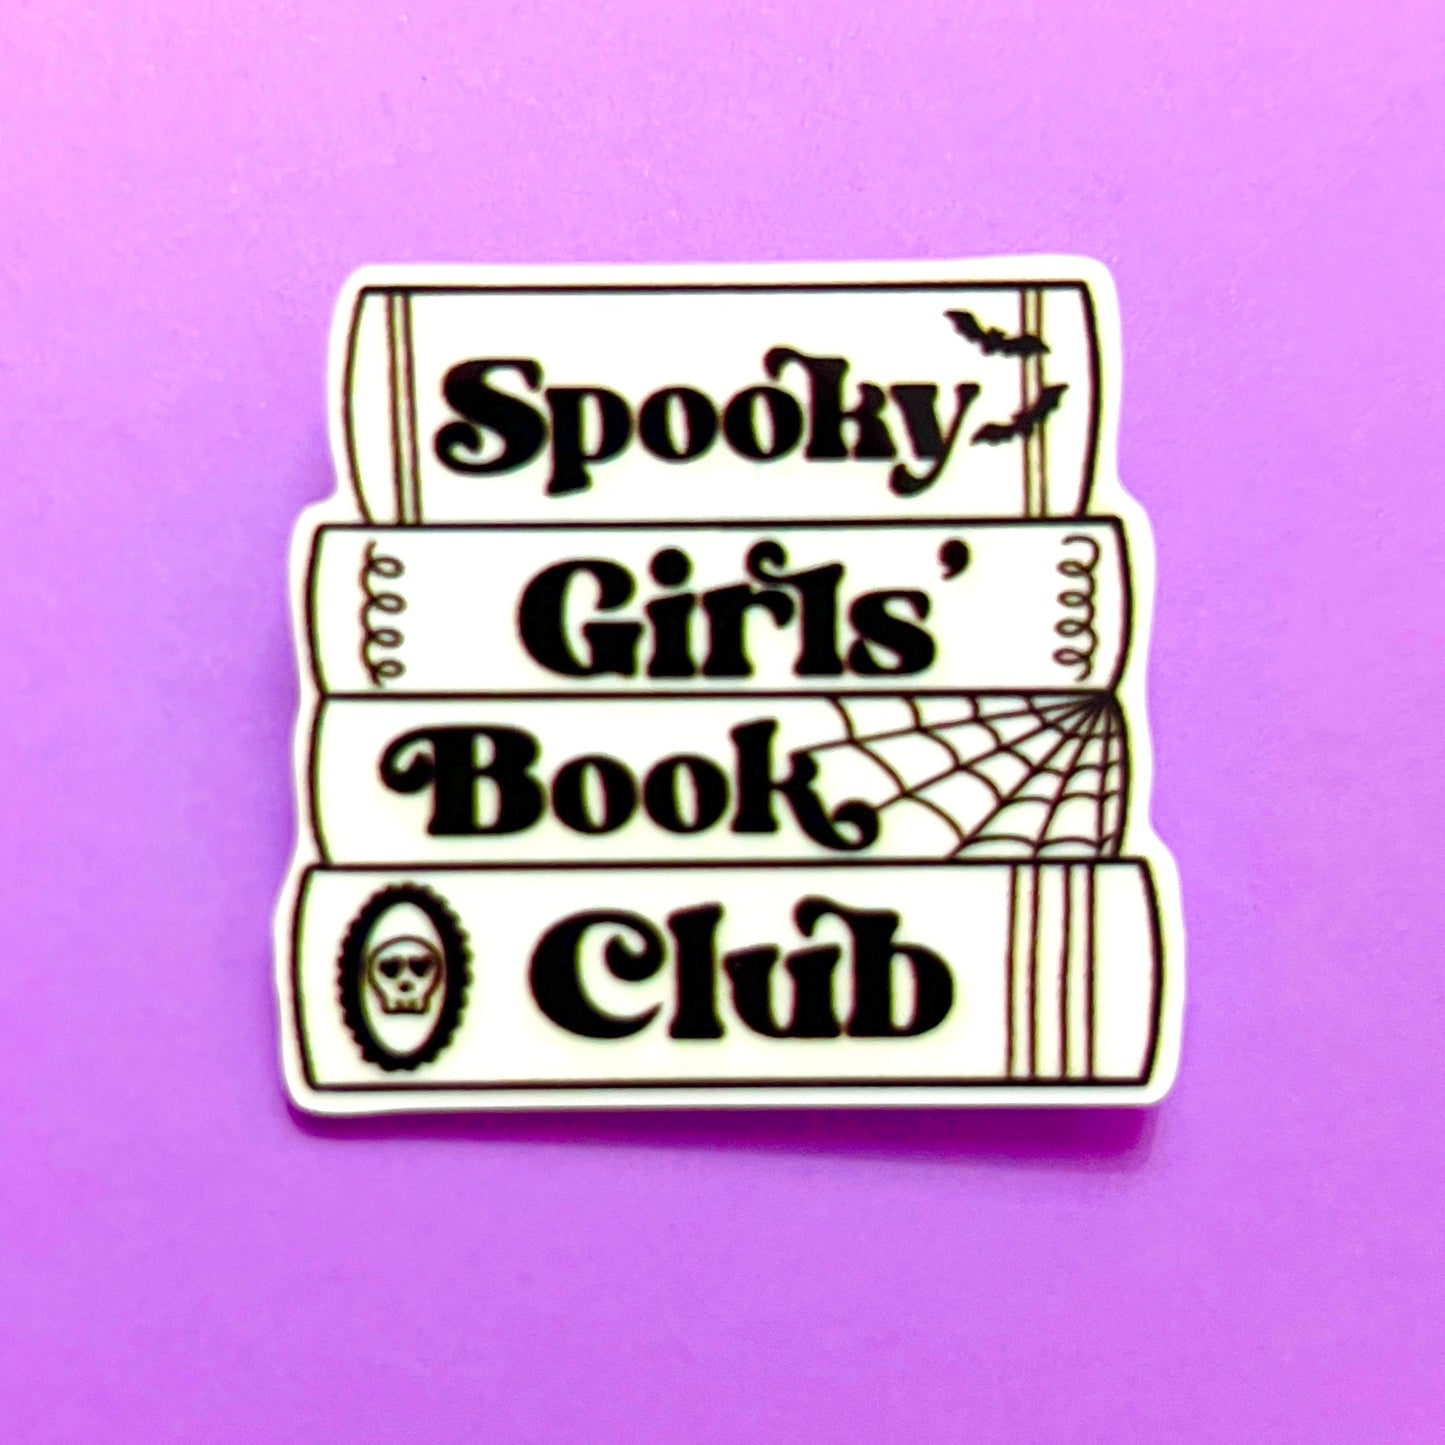 Spooky Girls Book Club Pin Brooch